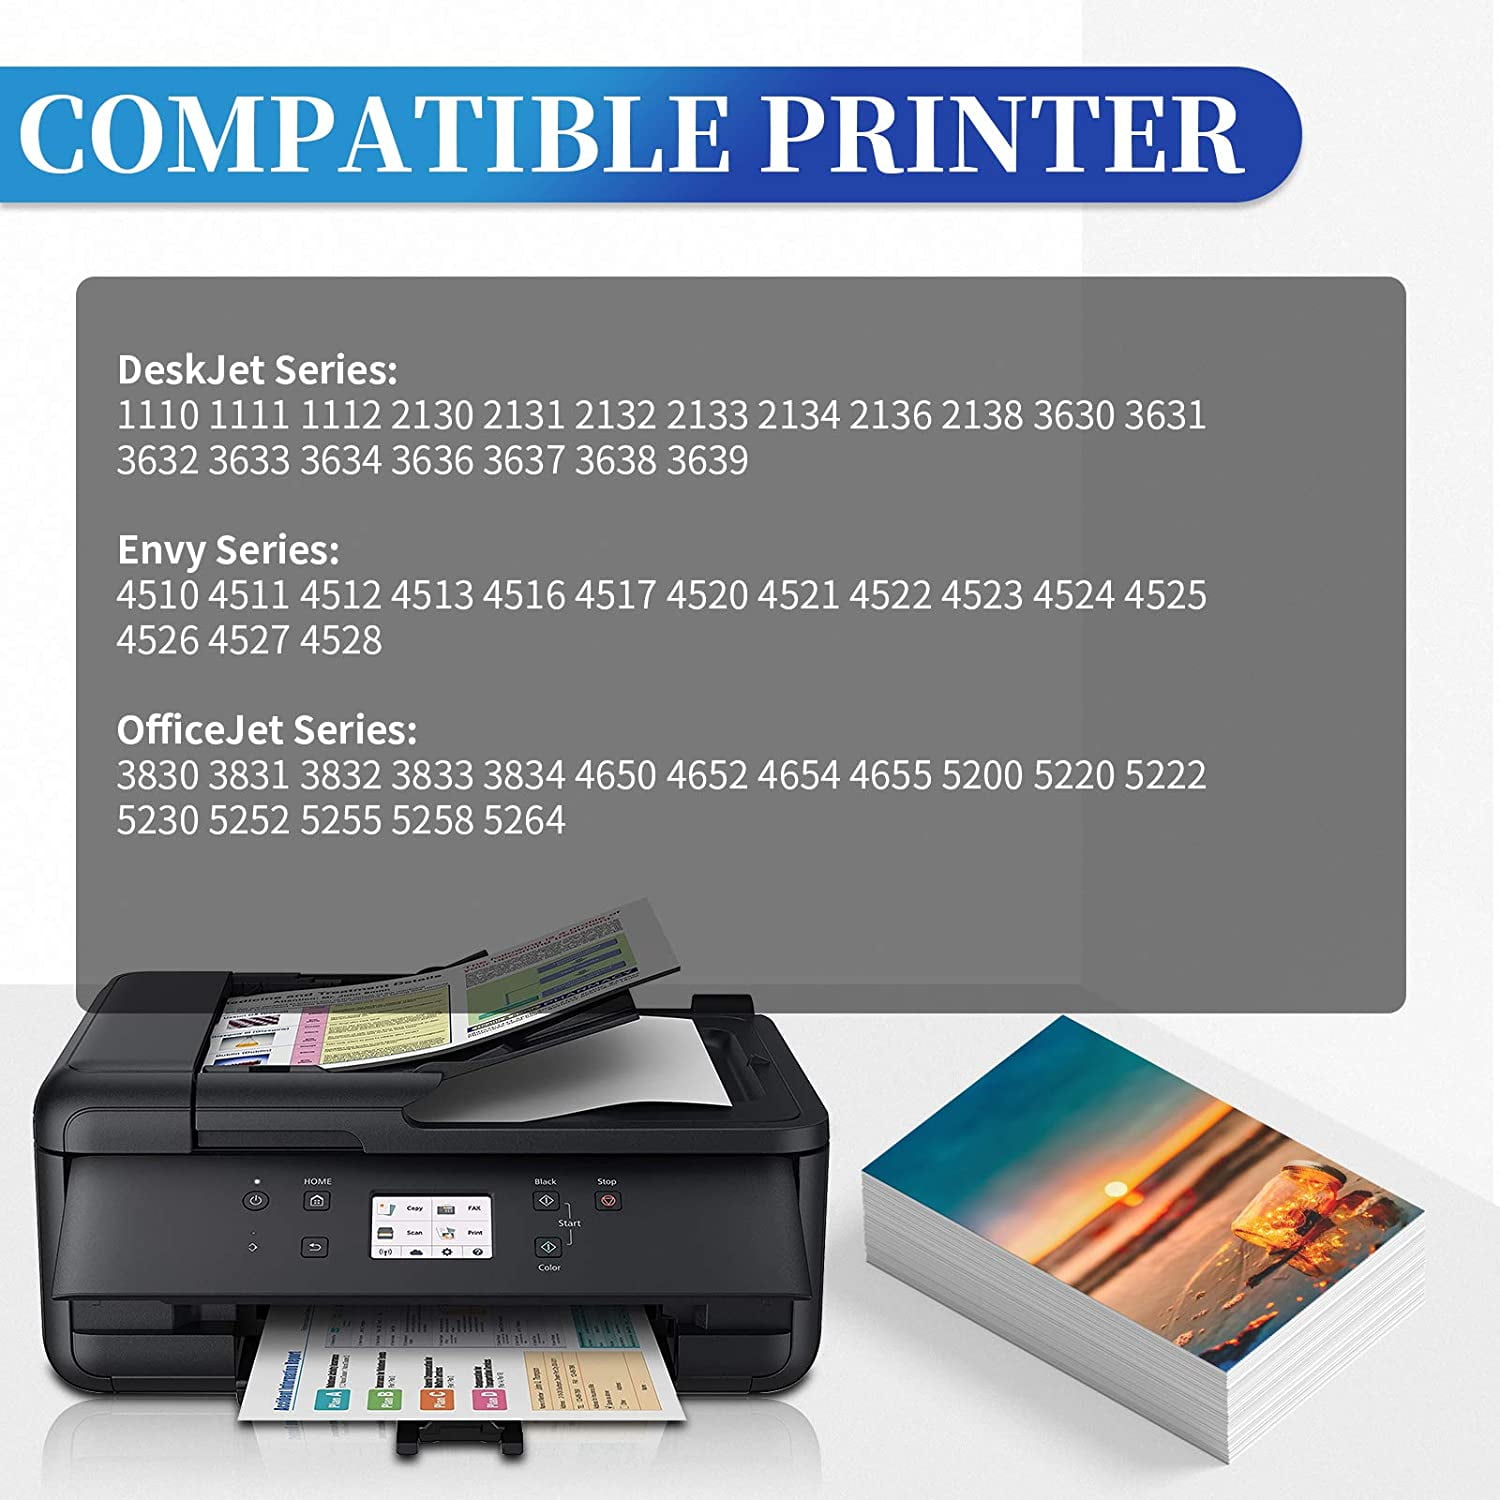 SOPIN Remanufactured 63 Black Ink Cartridge Replacement for HP 63 63XL for HP OfficeJet 3830 5255 5258 Envy 4520 4512 4513 4516 DeskJet 1112 1110 3630 3632 3634 3639 Printer 2 Black 